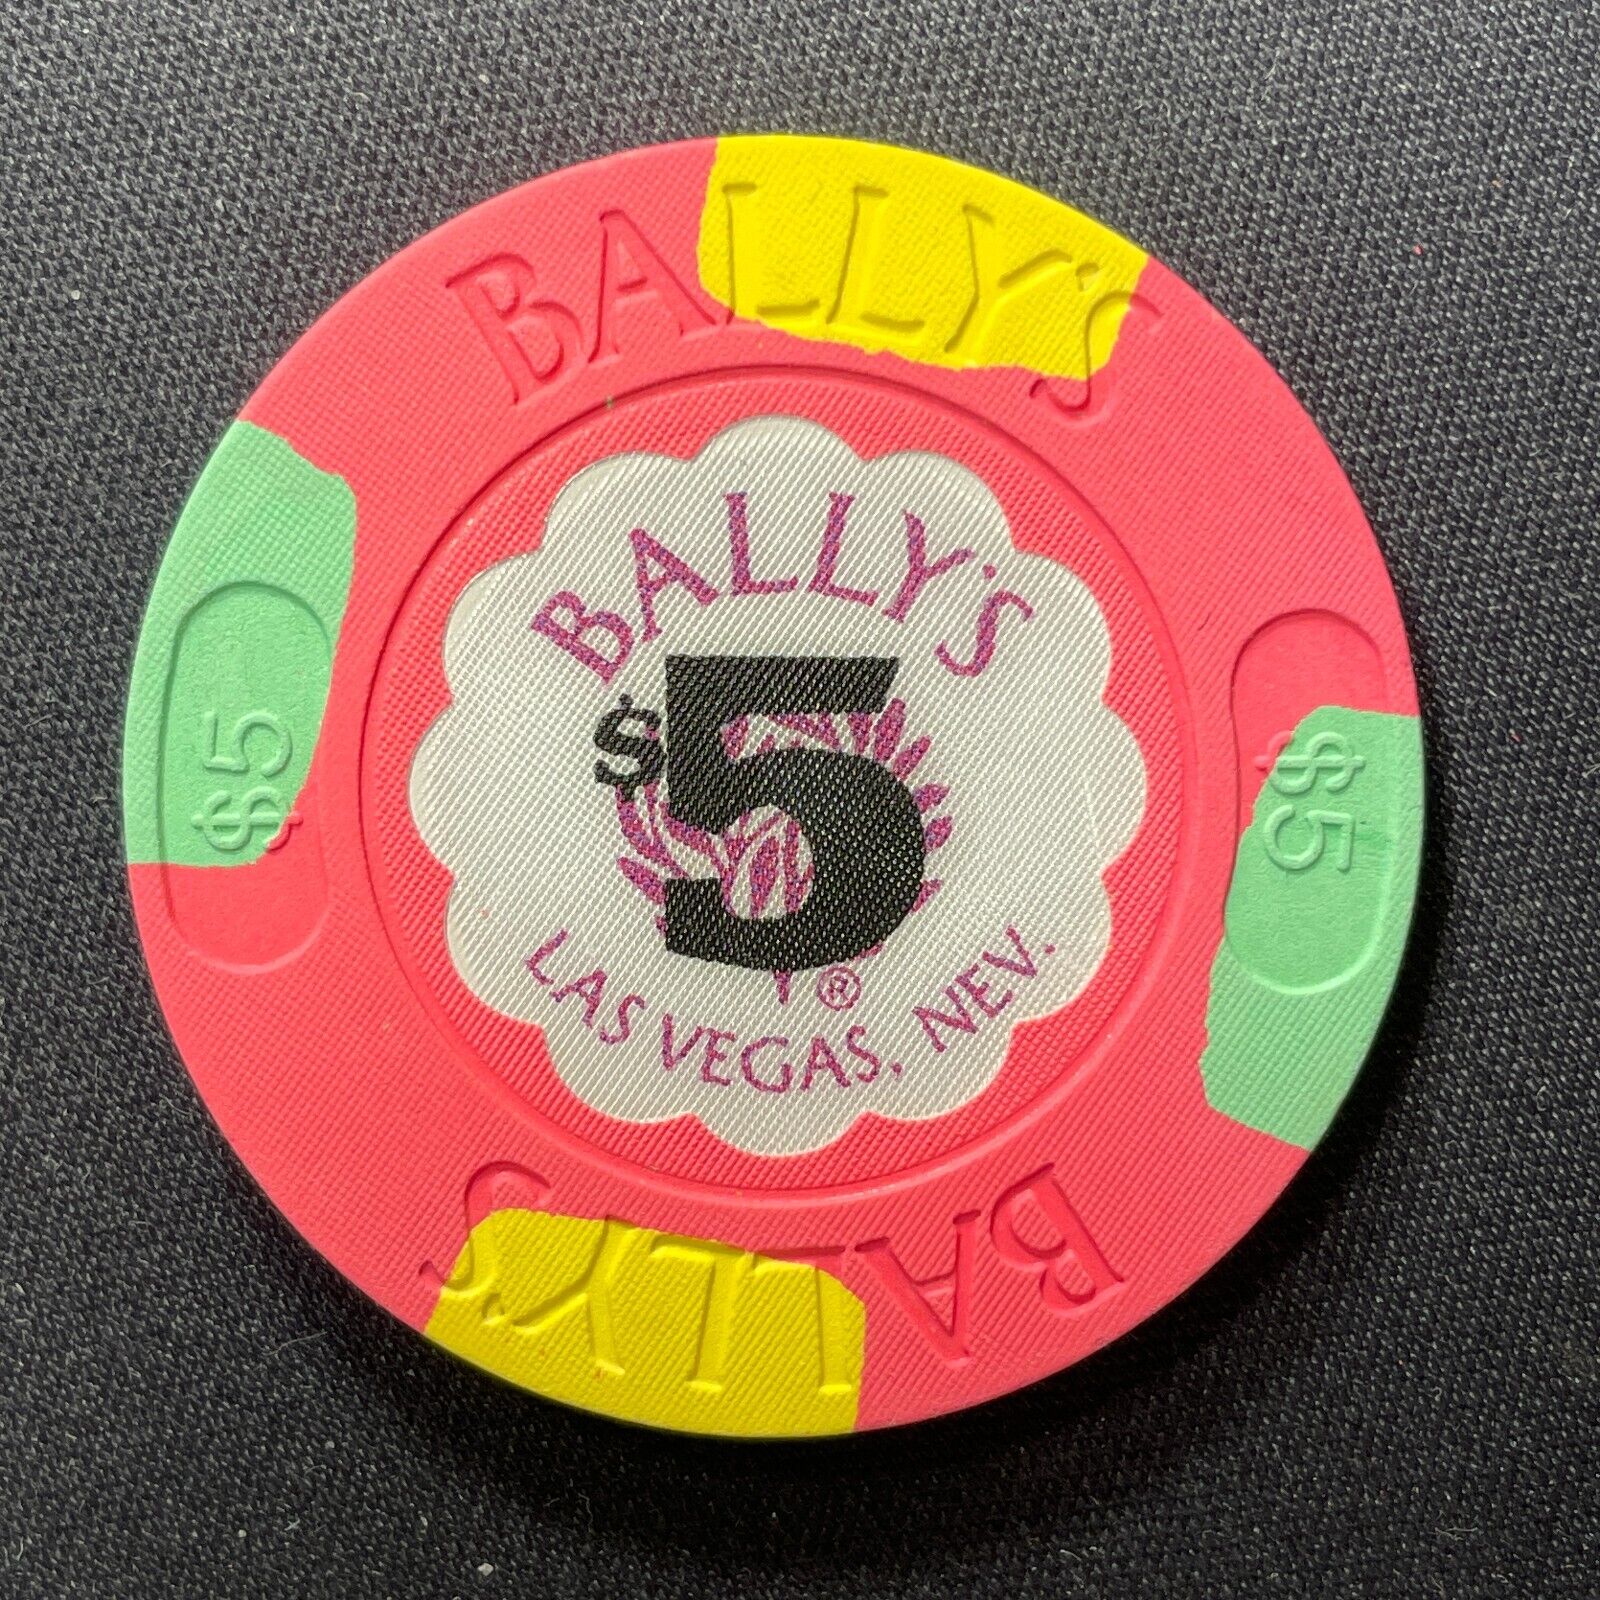 Bally\'s Las Vegas $5 casino chip house chip 1999 obsolete gaming token LV5